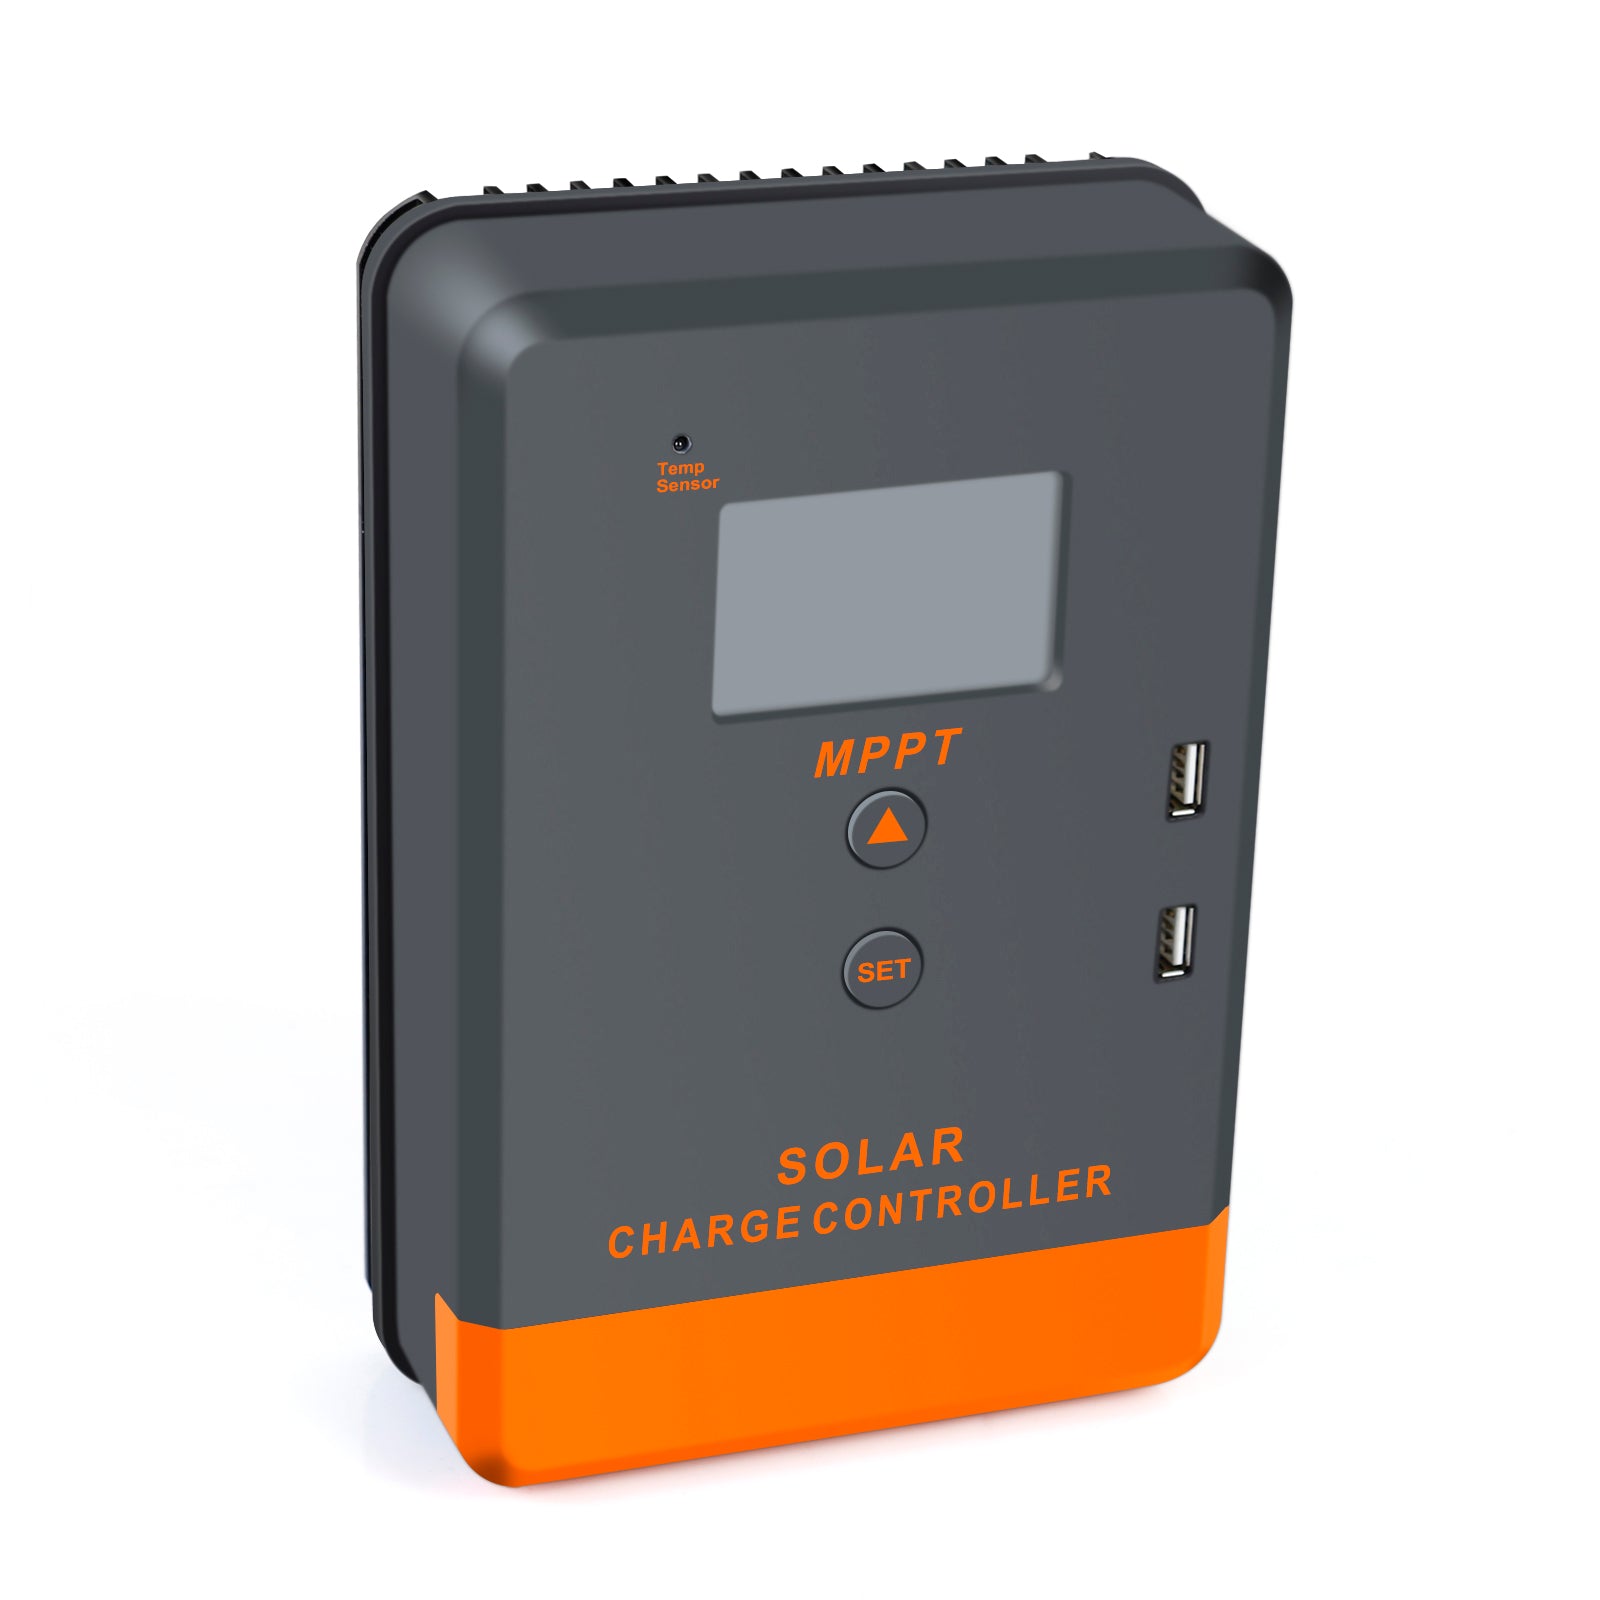 PowMr 20a mppt solar charger controller for 12volt or 24volt solar batteries